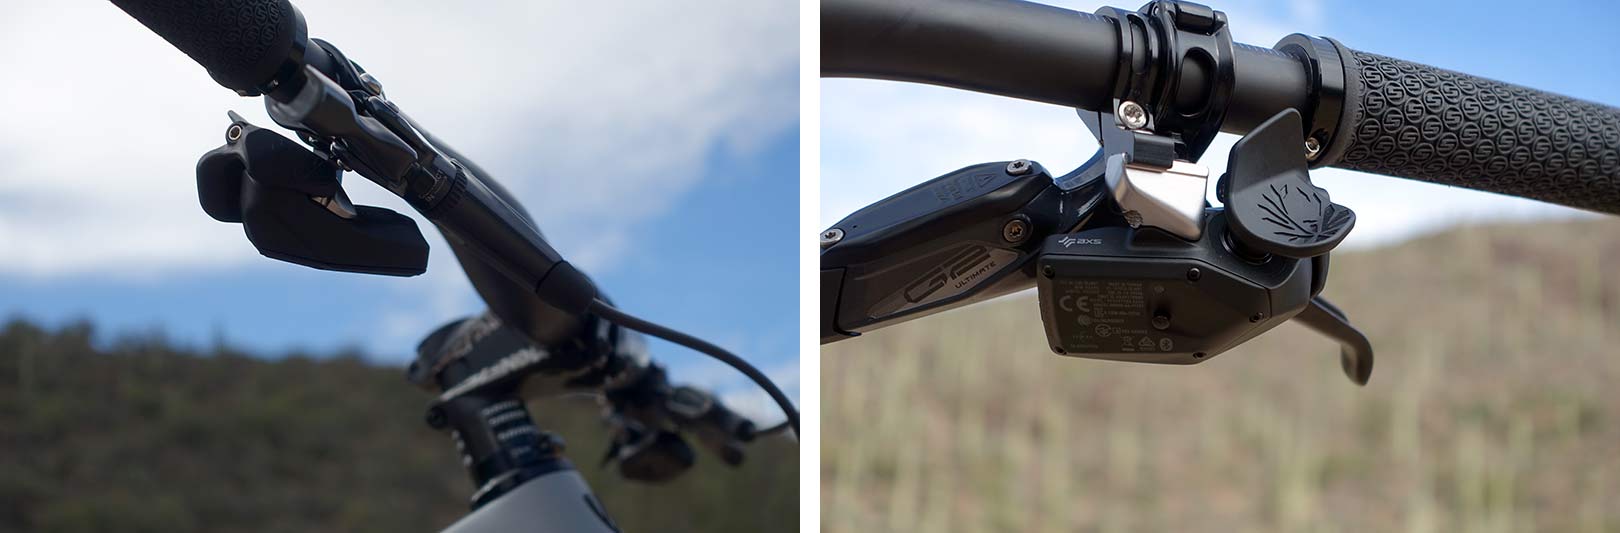 how do I customize the SRAM Eagle AXS eTap mountain bike shifters